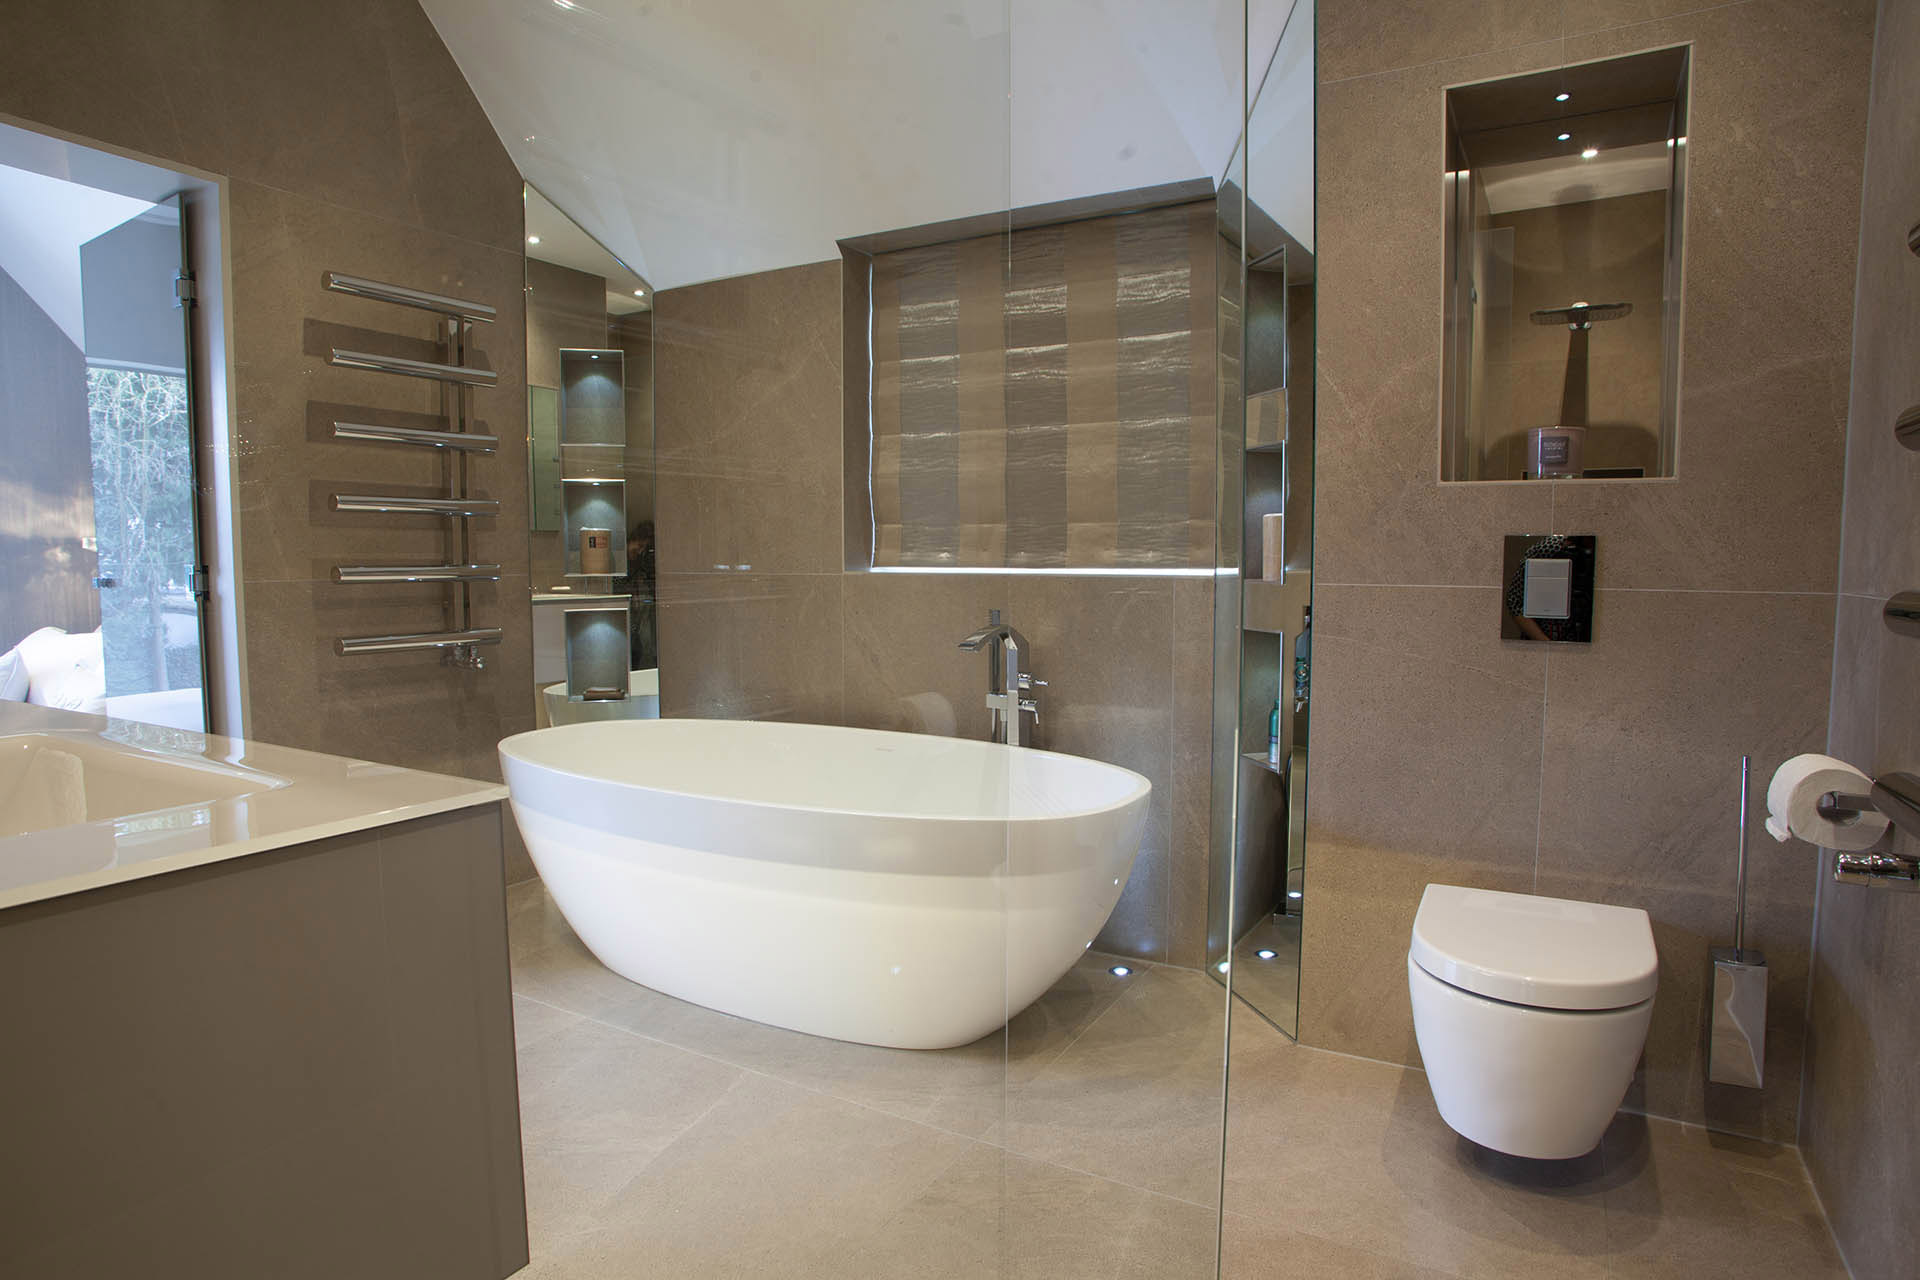 New North London - Bathroom